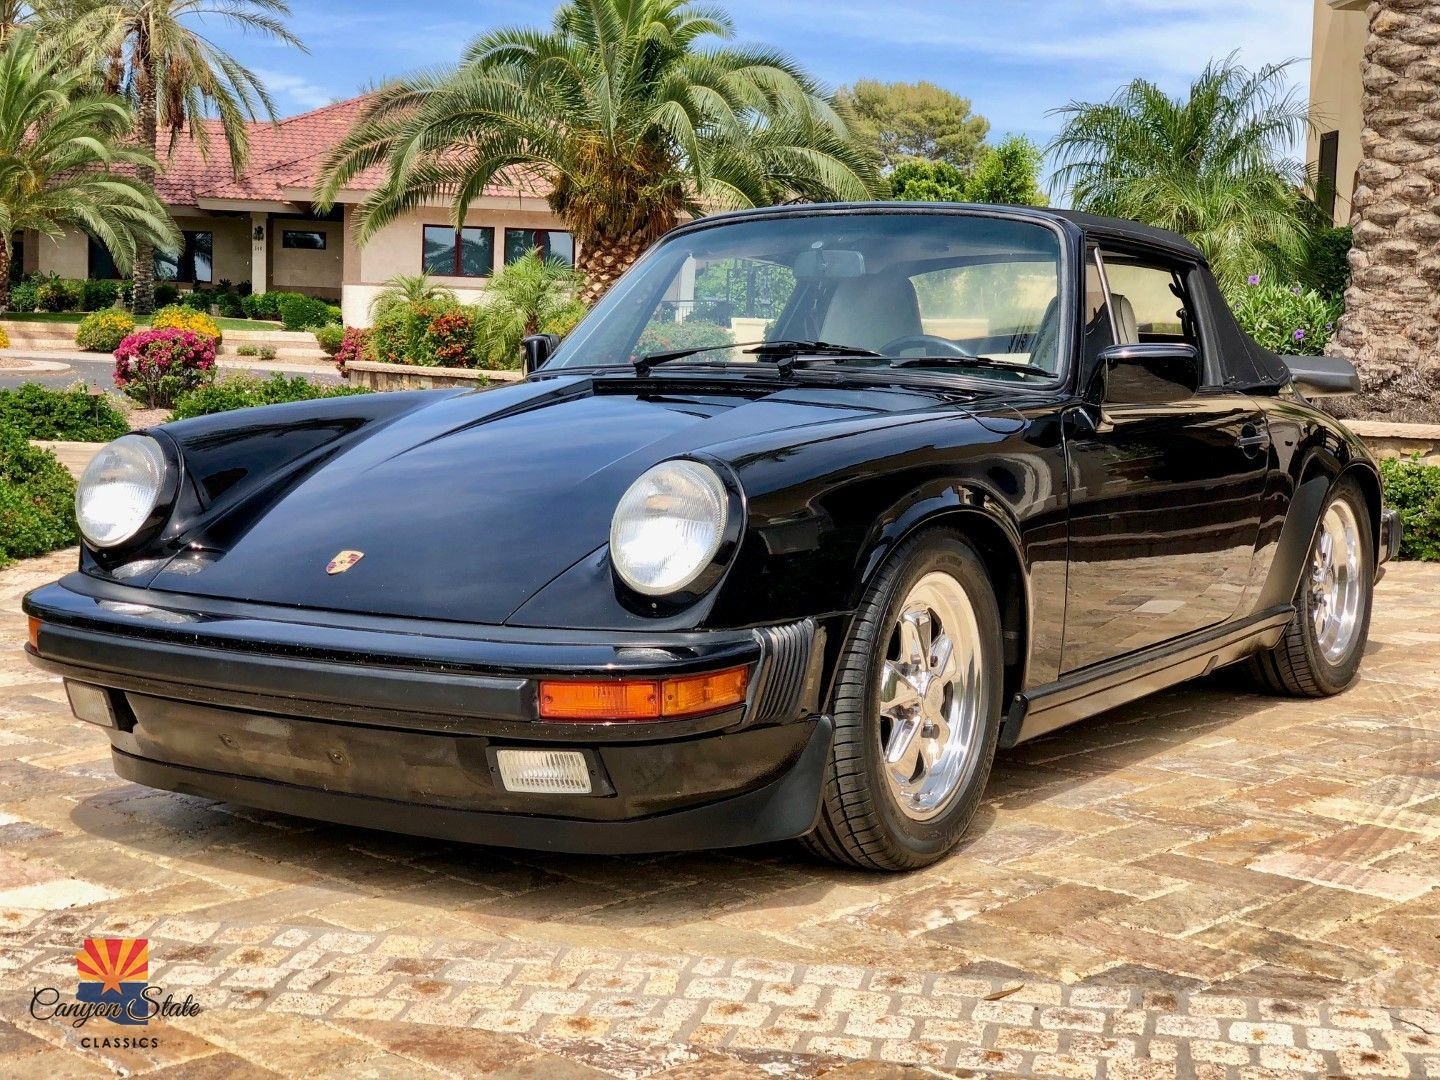 1987 Porsche 911 Canyon State Classics